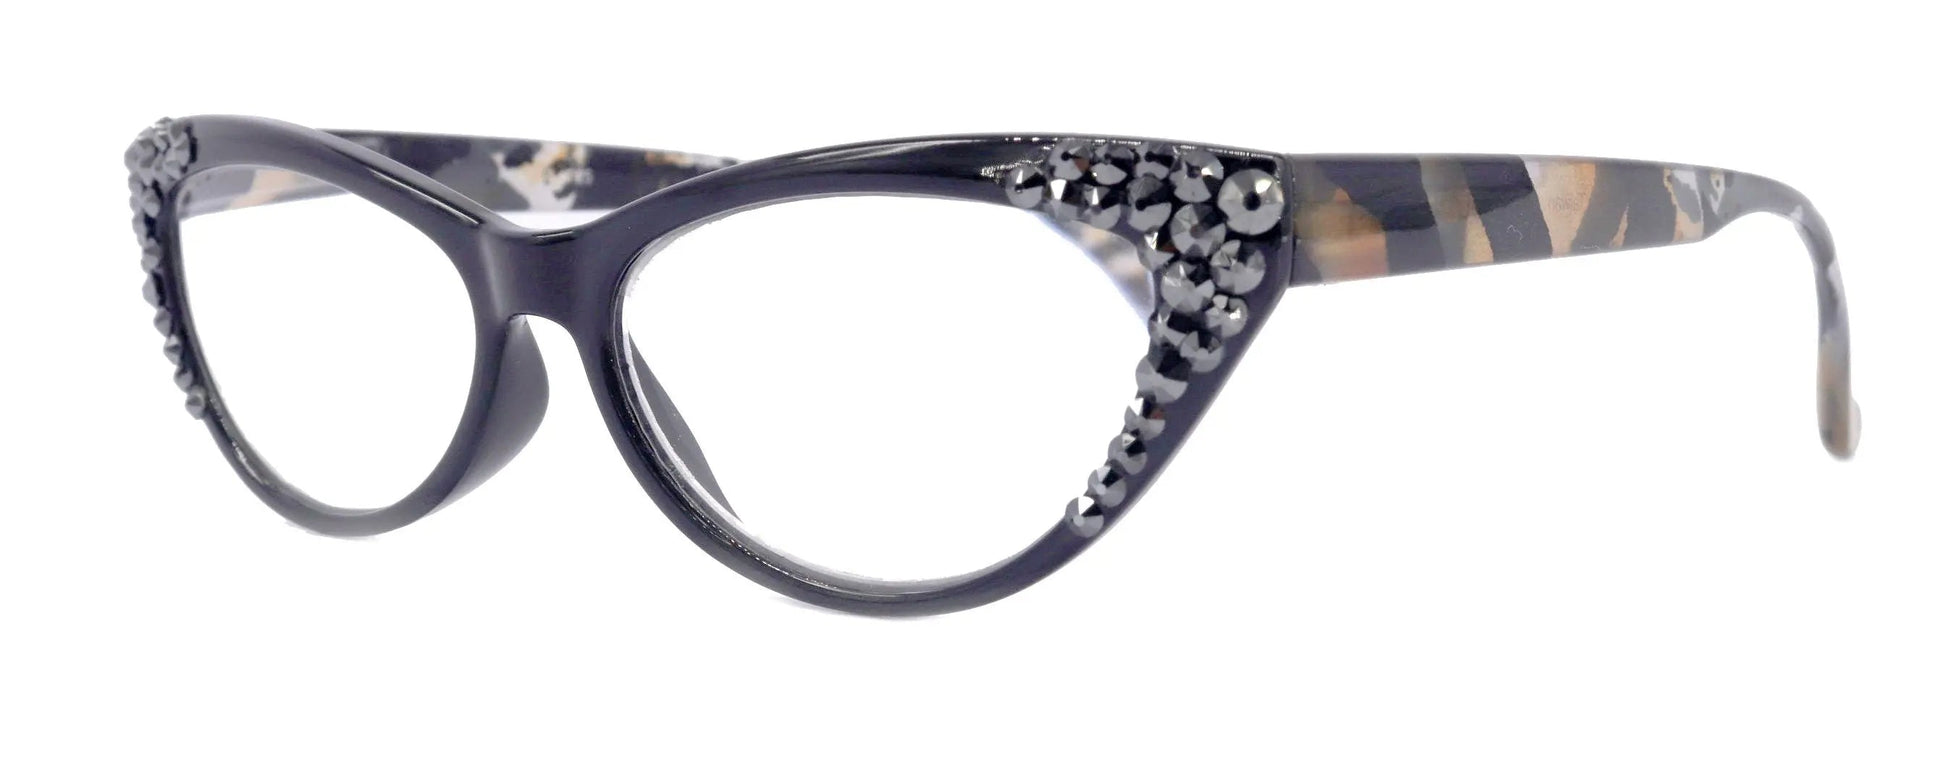 Lynx, (Bling) Cat Eyes, Women Reading Glasses Adorned W (Hematite) Genuine European Crystals (Leopard Brown, Black) Frame, NY Fifth Avenue. 